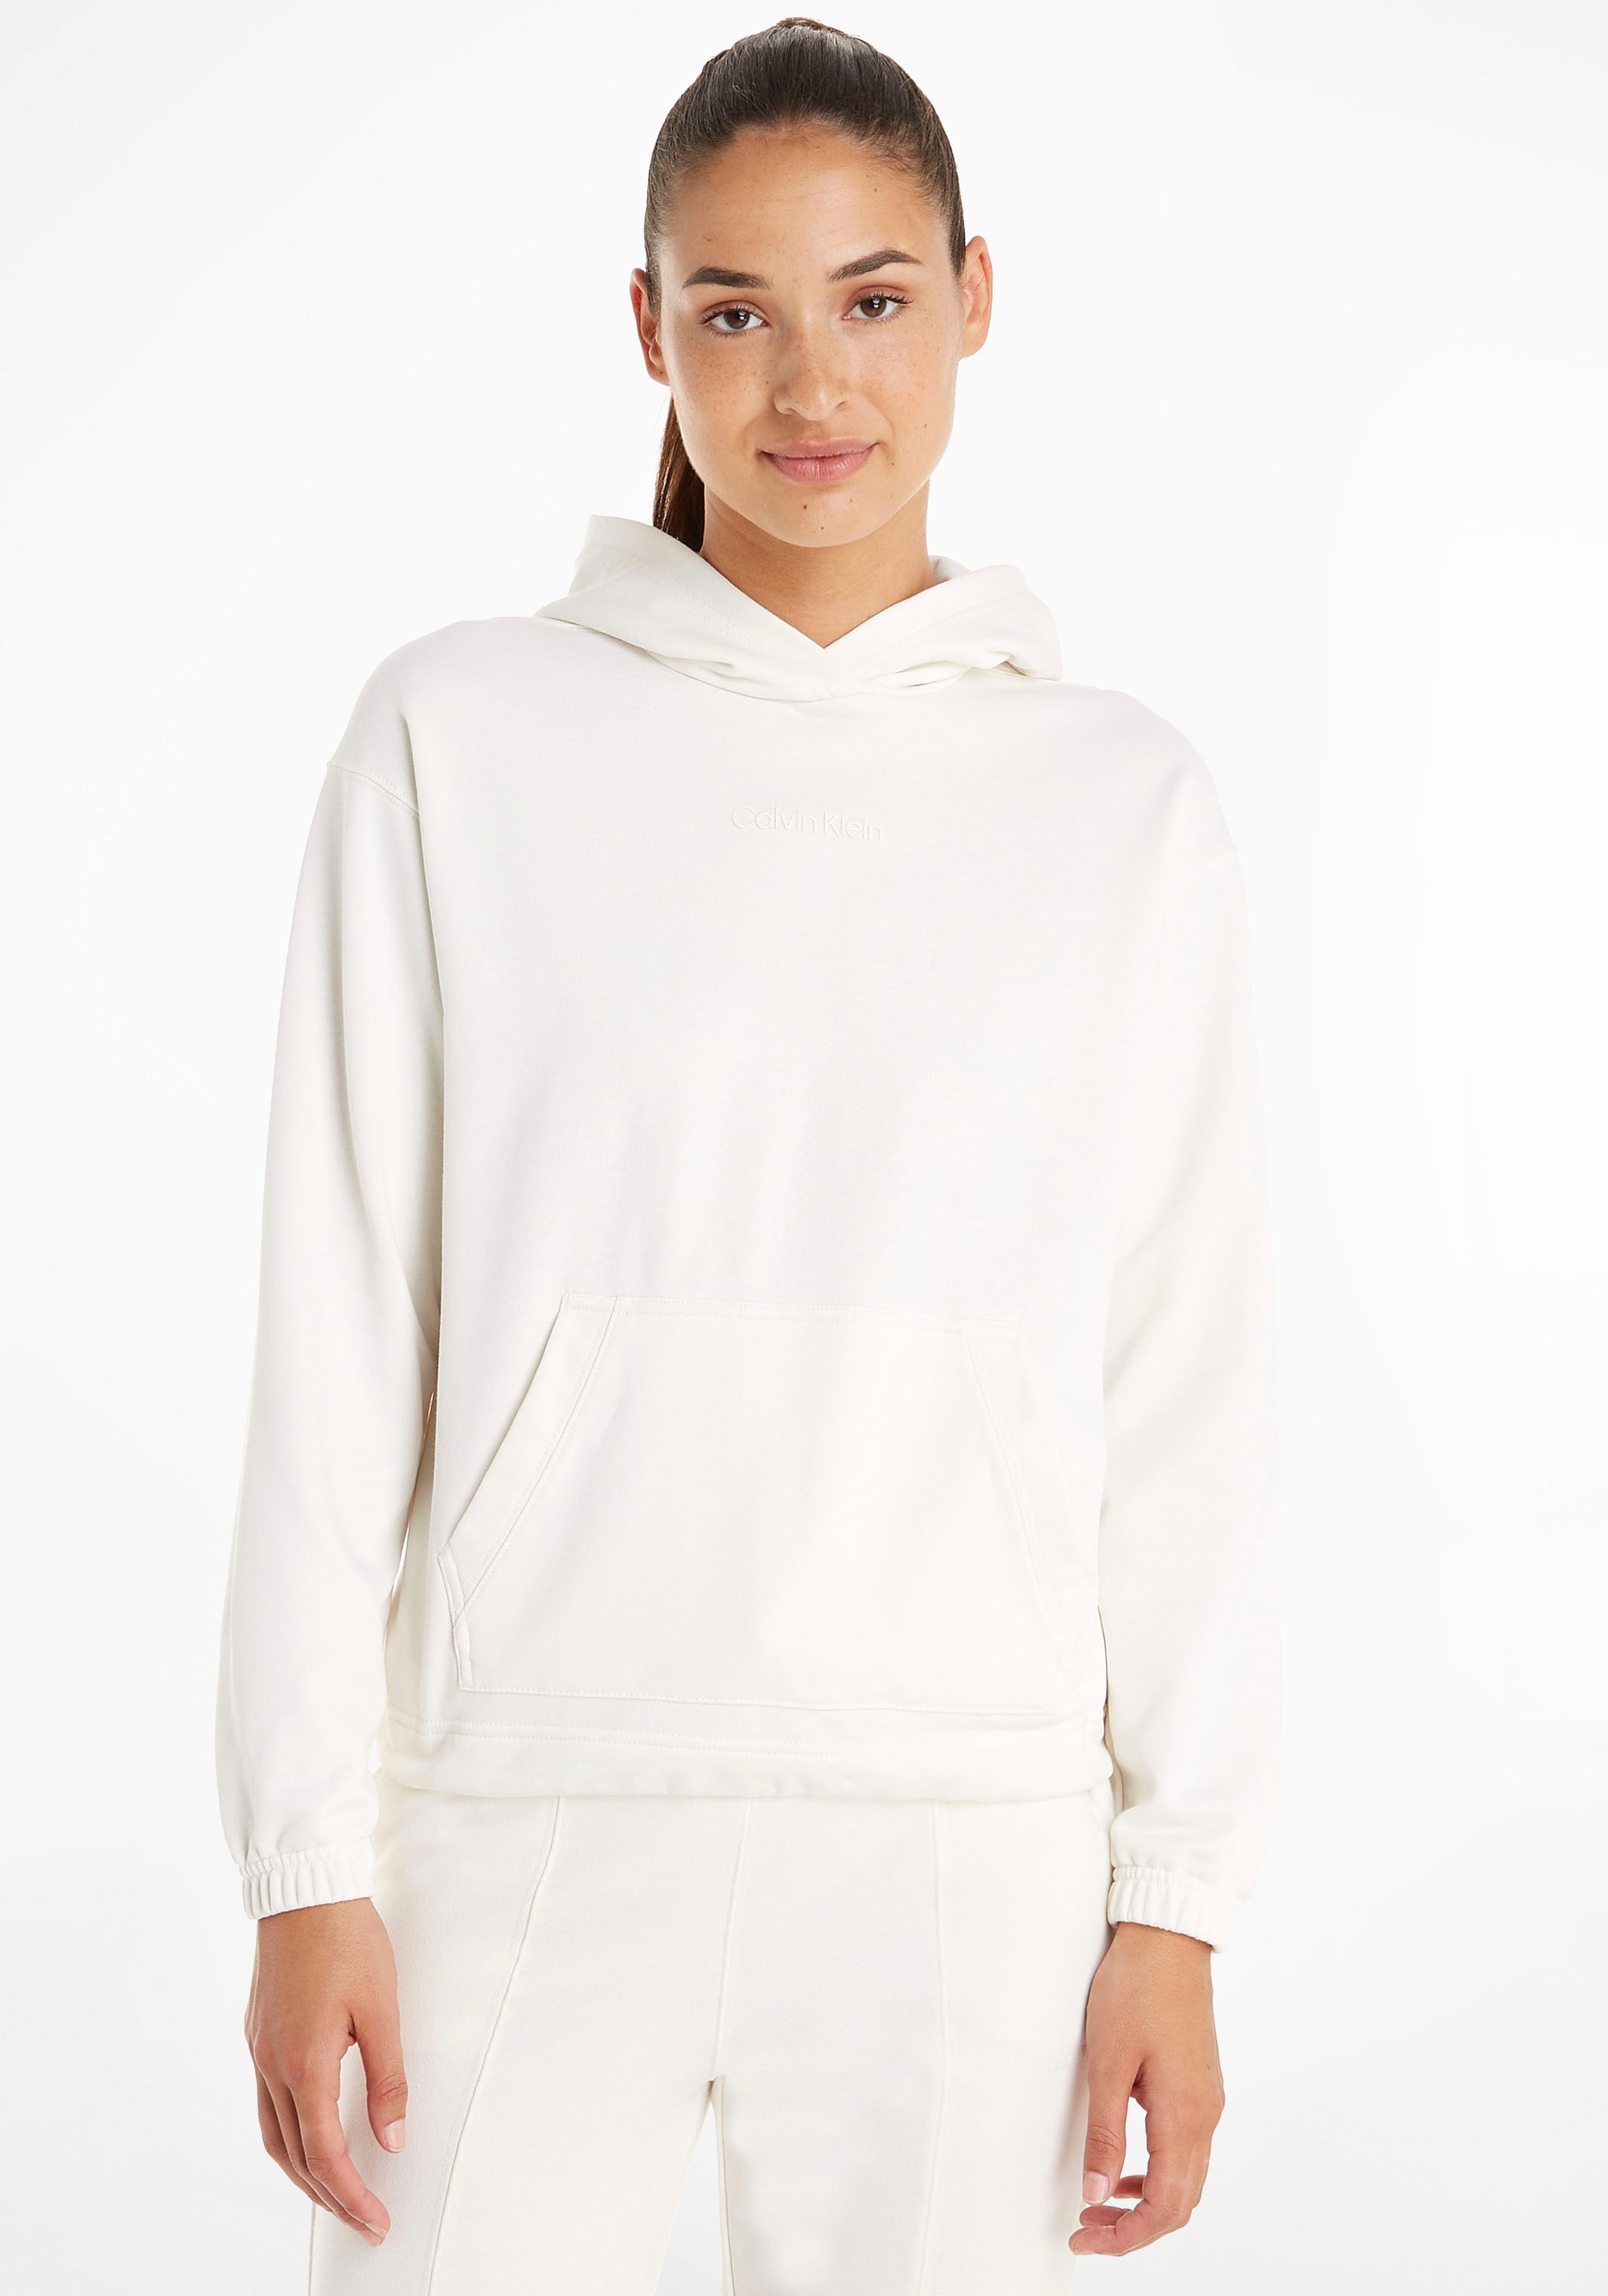 Calvin Klein Sport Kapuzensweatshirt »Sweatshirt PW - Hoodie« online kaufen